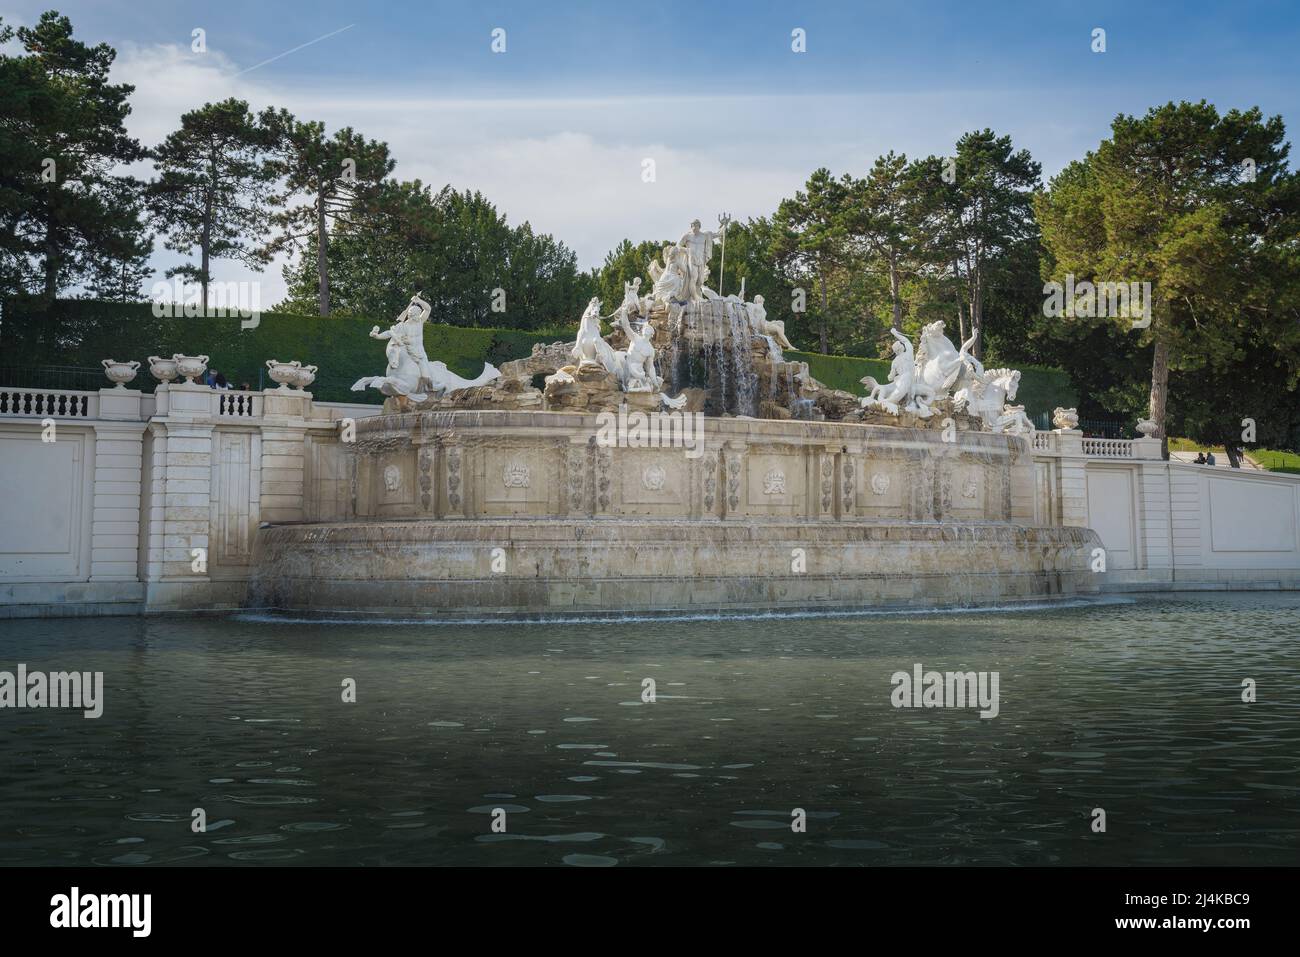 Fontaine de Neptune aux jardins du palais de Schönbrunn - par Johann Ferdinand Hetzendorf von Hohenberg et Wilhelm Beyer - Vienne, Autriche Banque D'Images